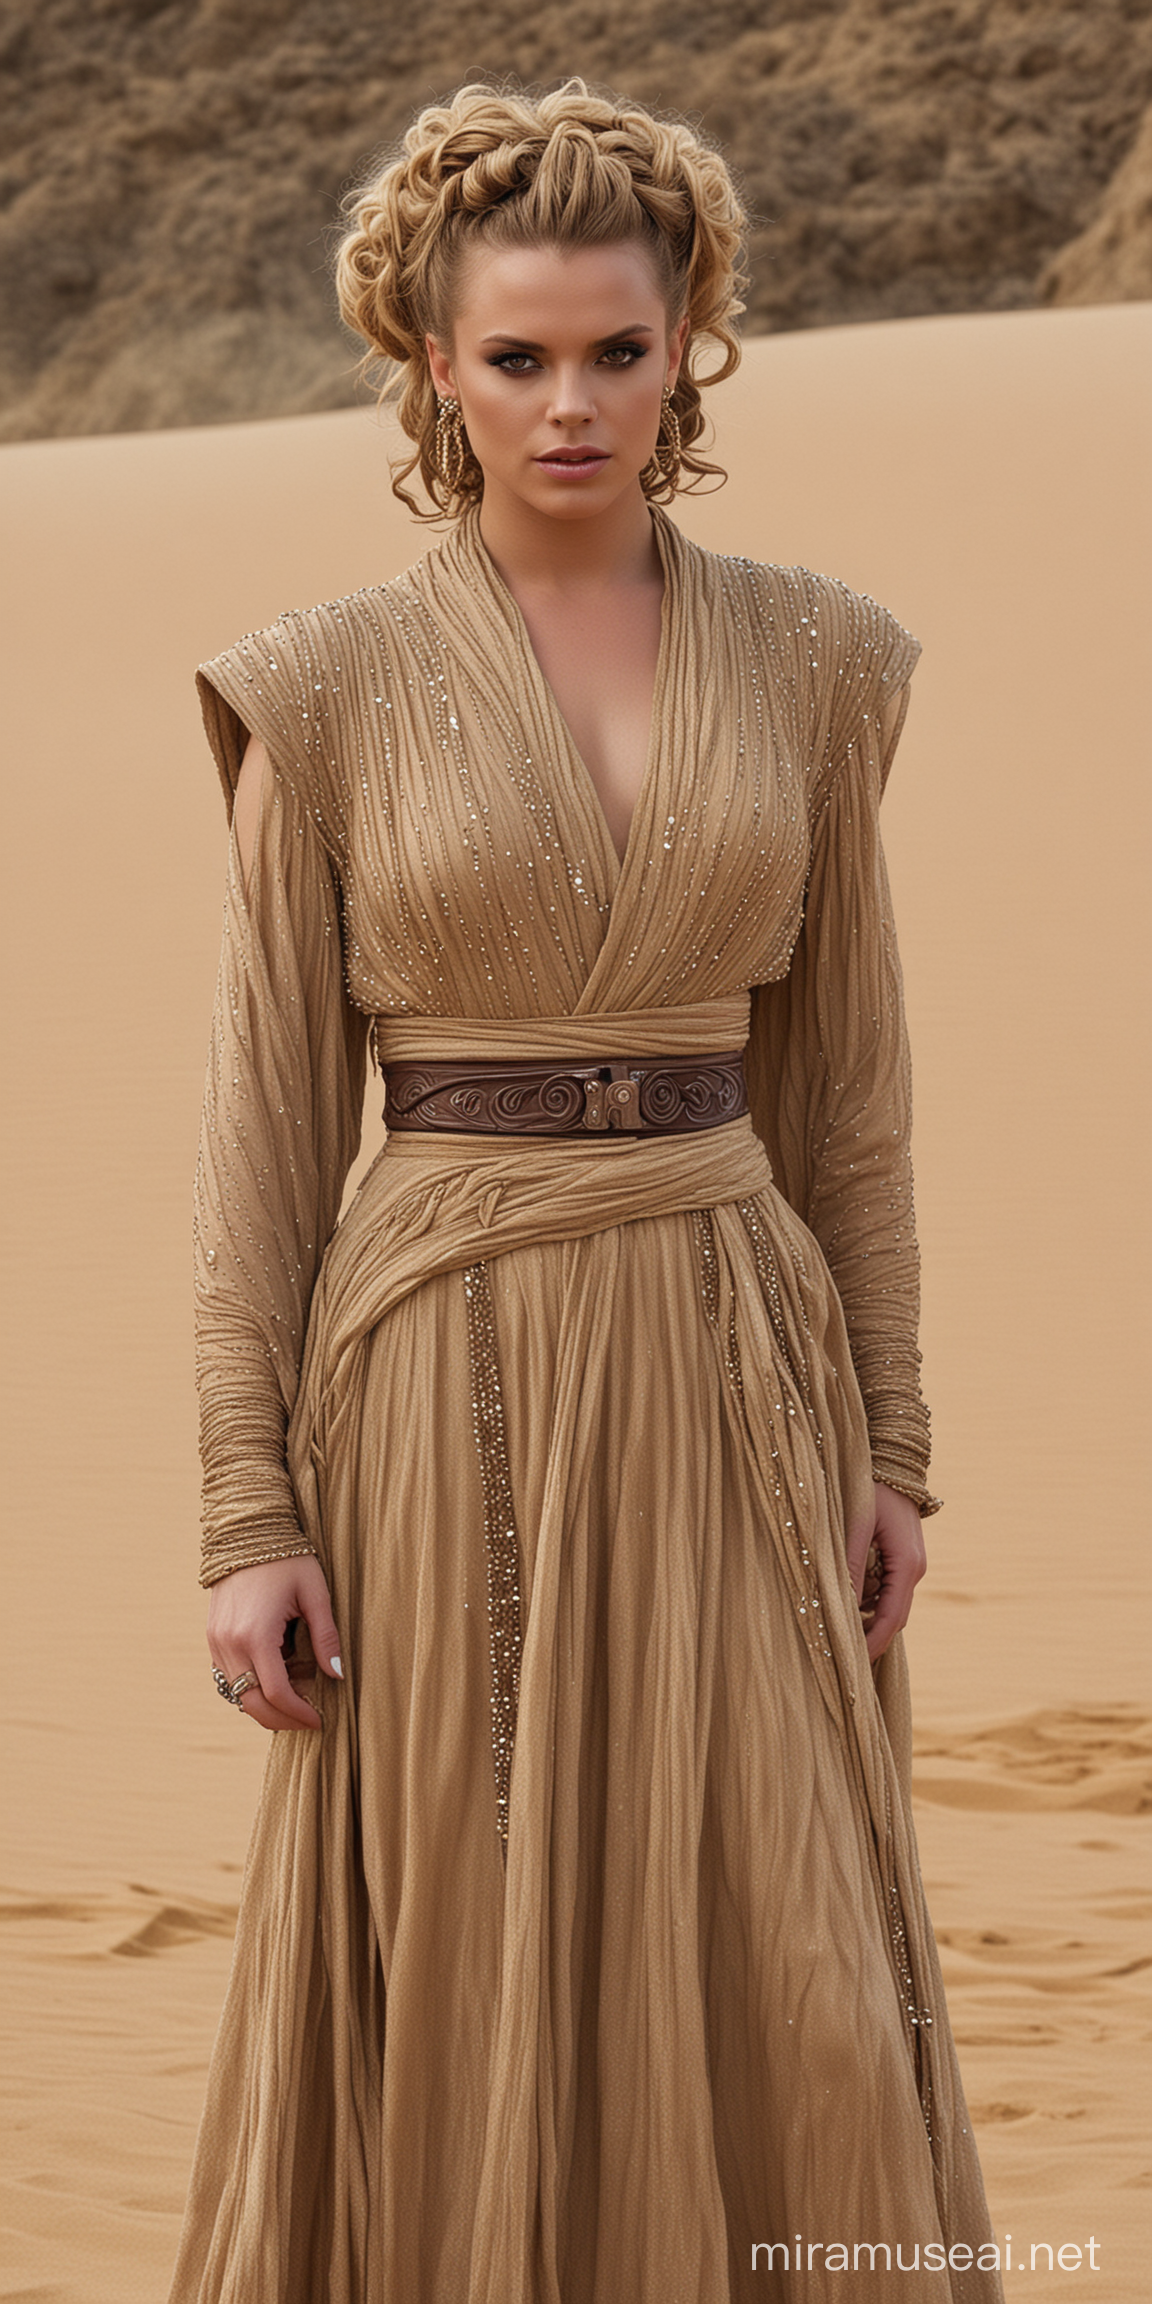 Anakin Skywalker Drag Queen Transformation on a Sandy Beach